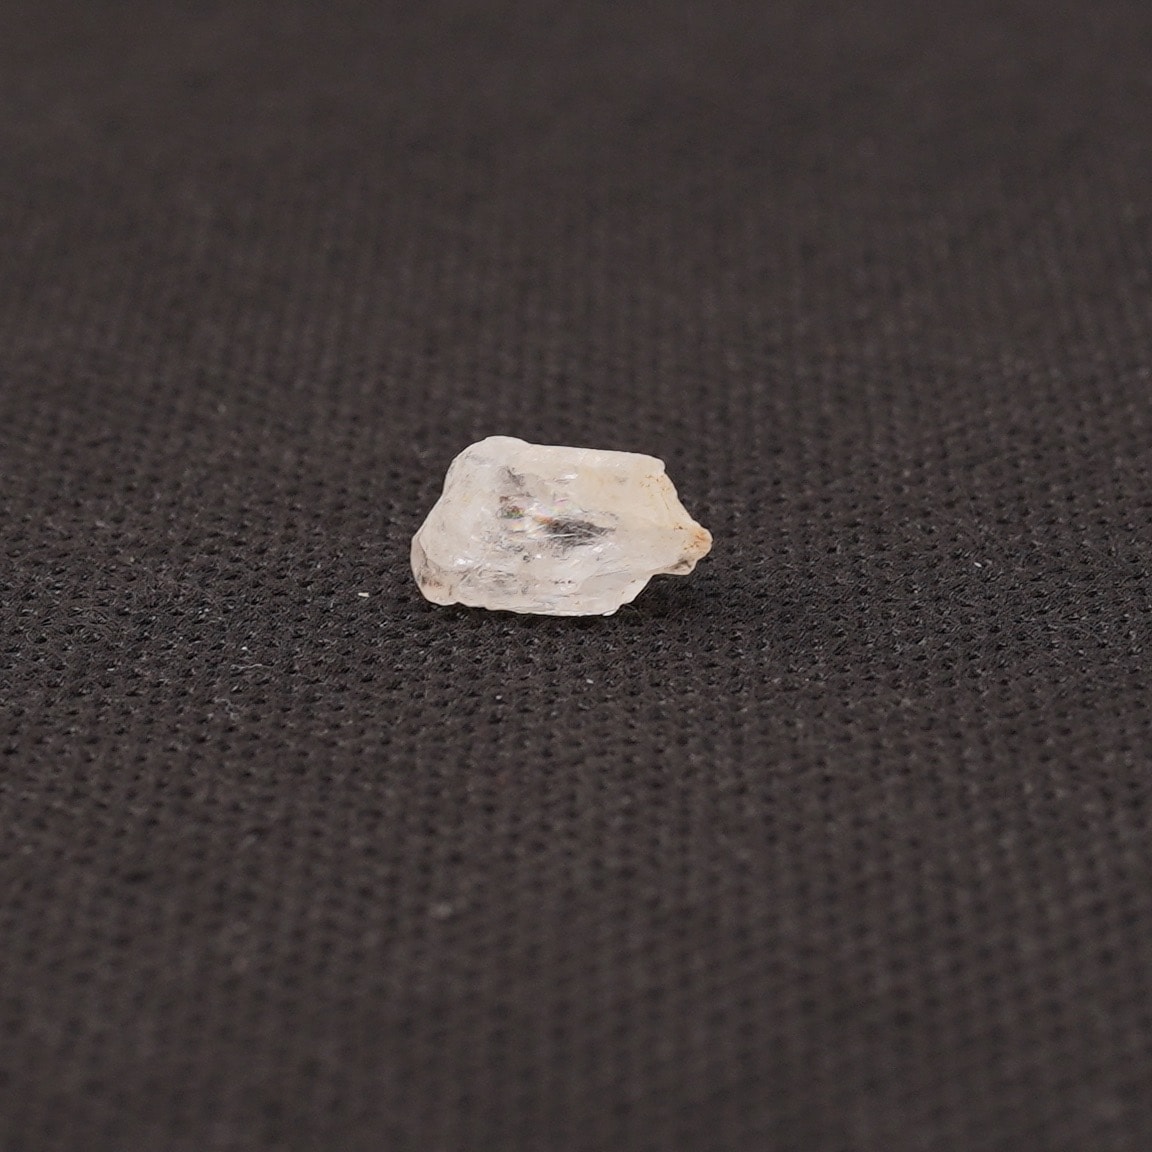 Fenacit nigerian cristal natural unicat f176